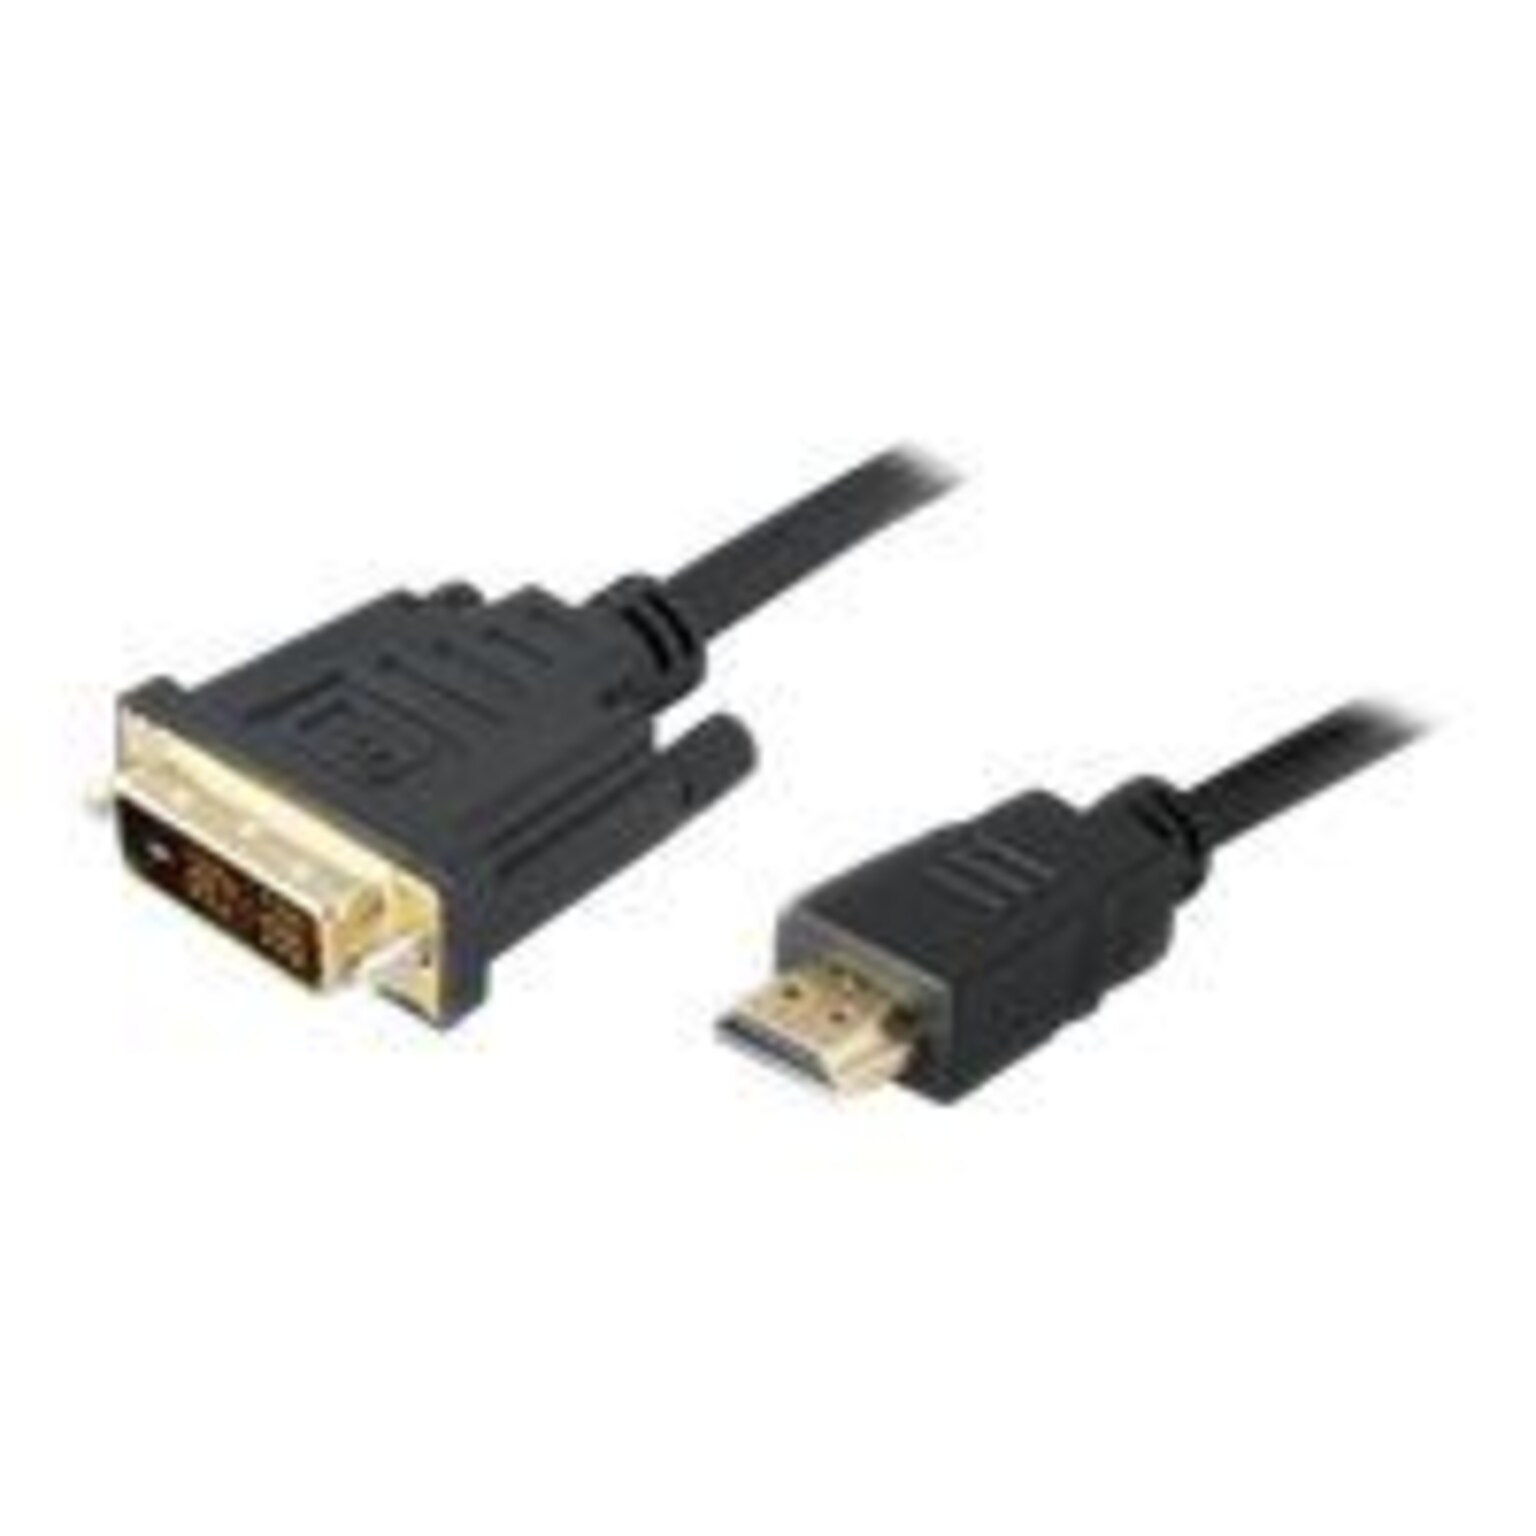 AddOn® 8 HDMI Male to DVI-D Male Adapter Cable, Black